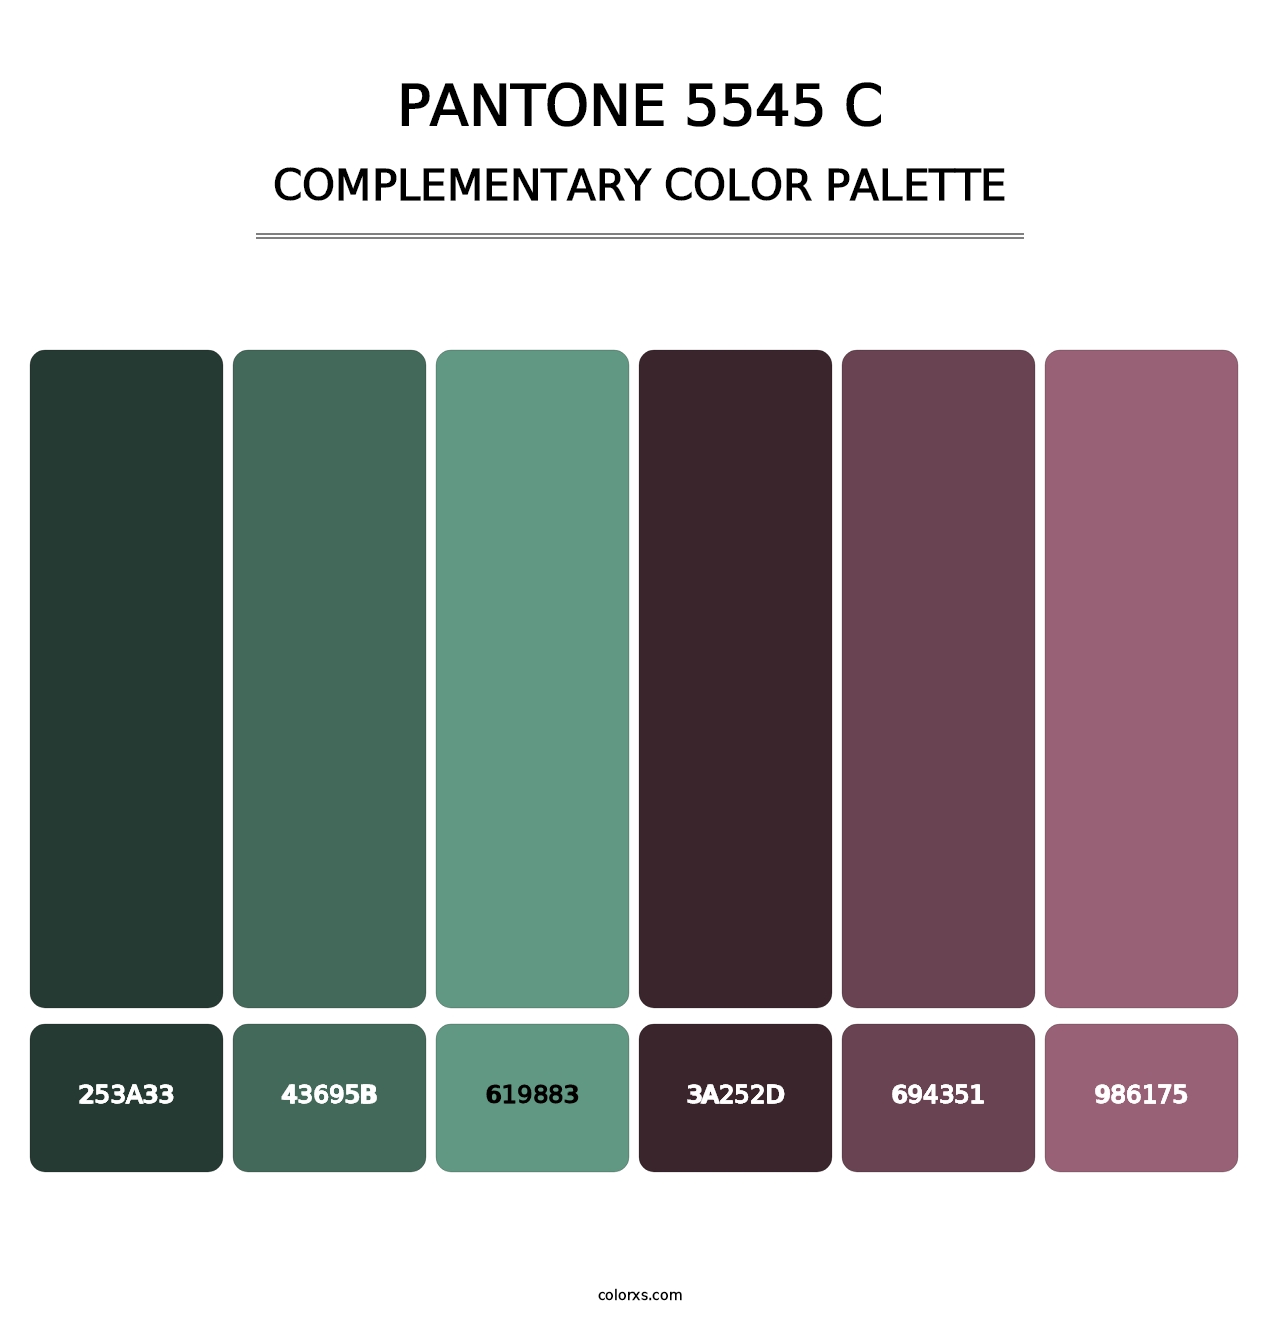 PANTONE 5545 C - Complementary Color Palette